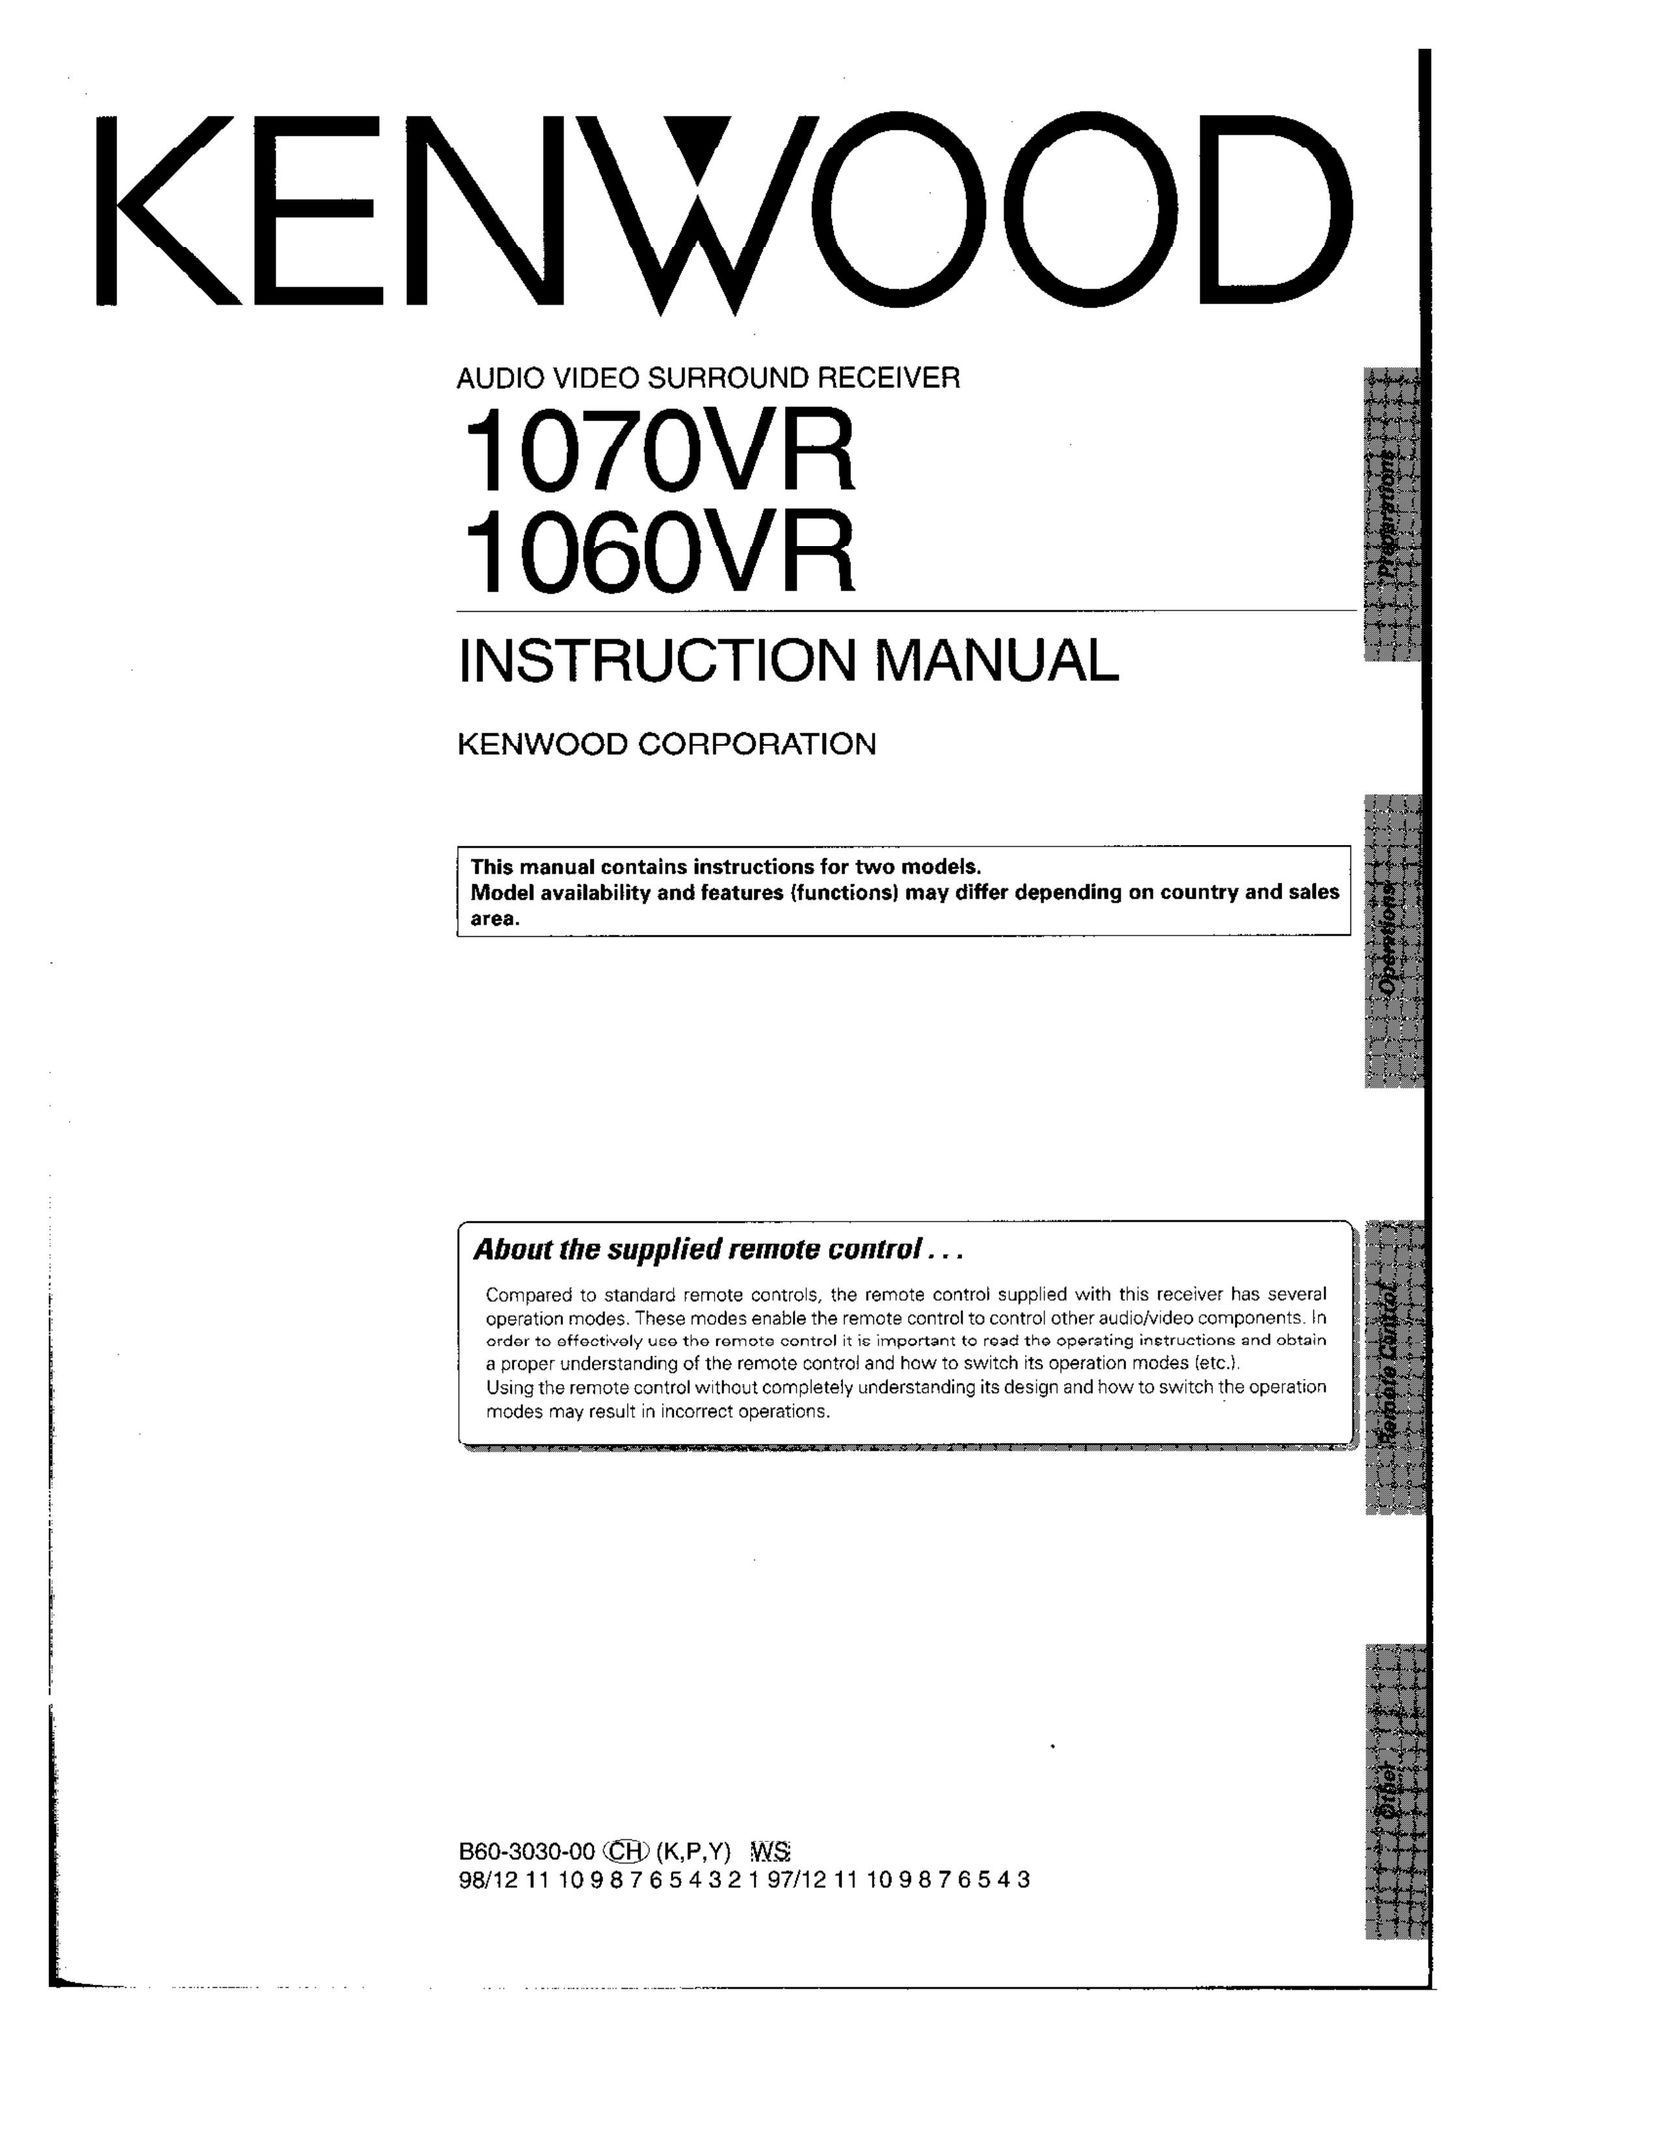 Kenwood 1070VR Stereo Receiver User Manual